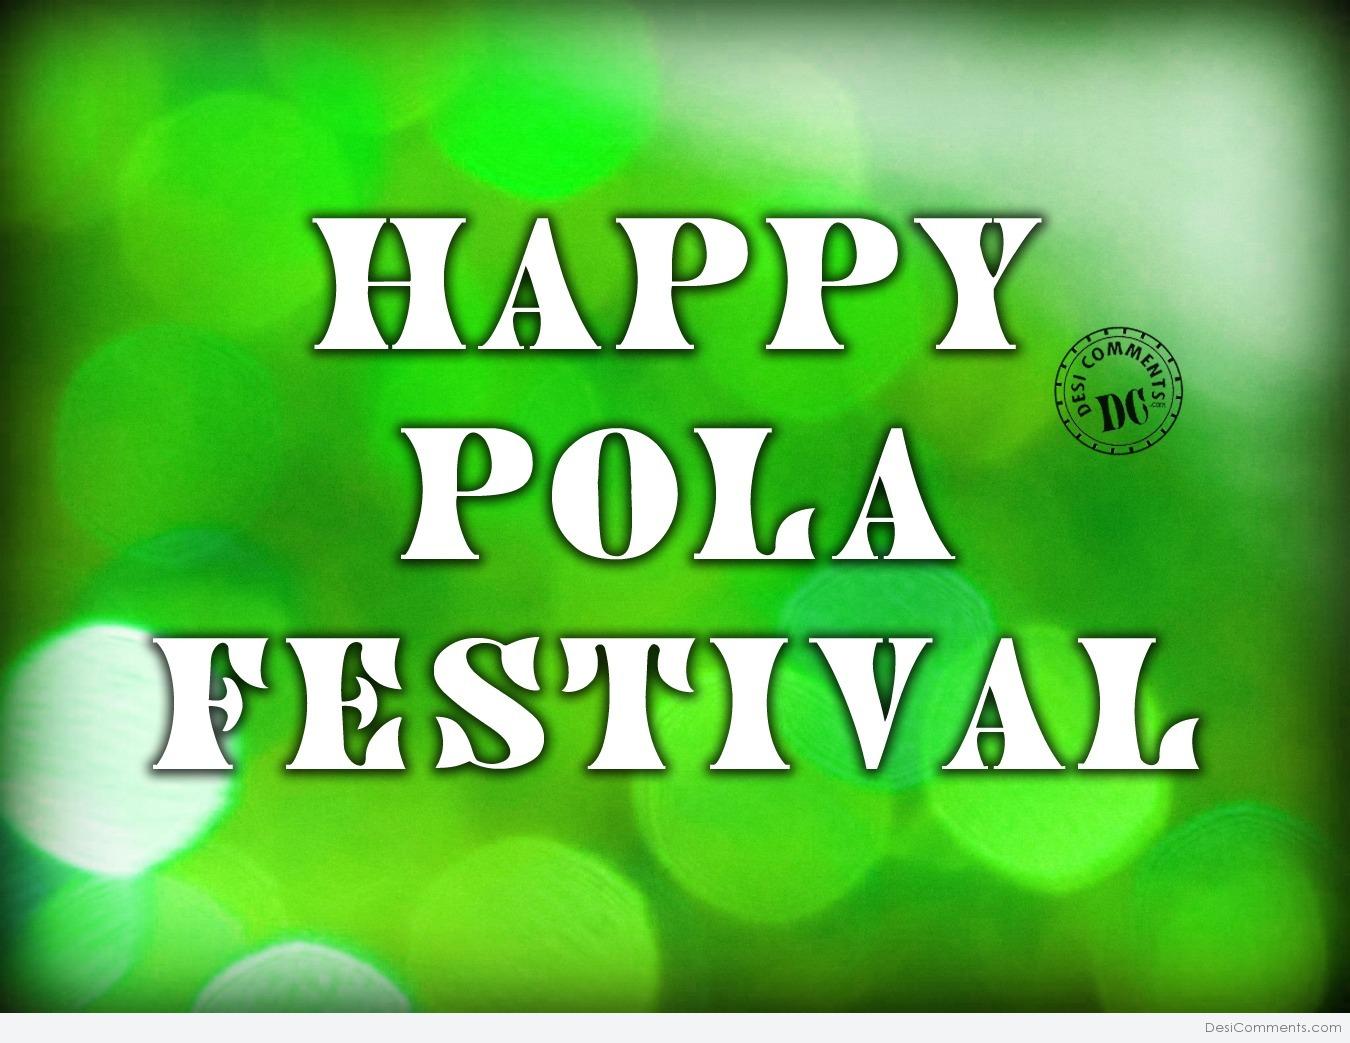 Happy Pola Festival Photo - DesiComments.com